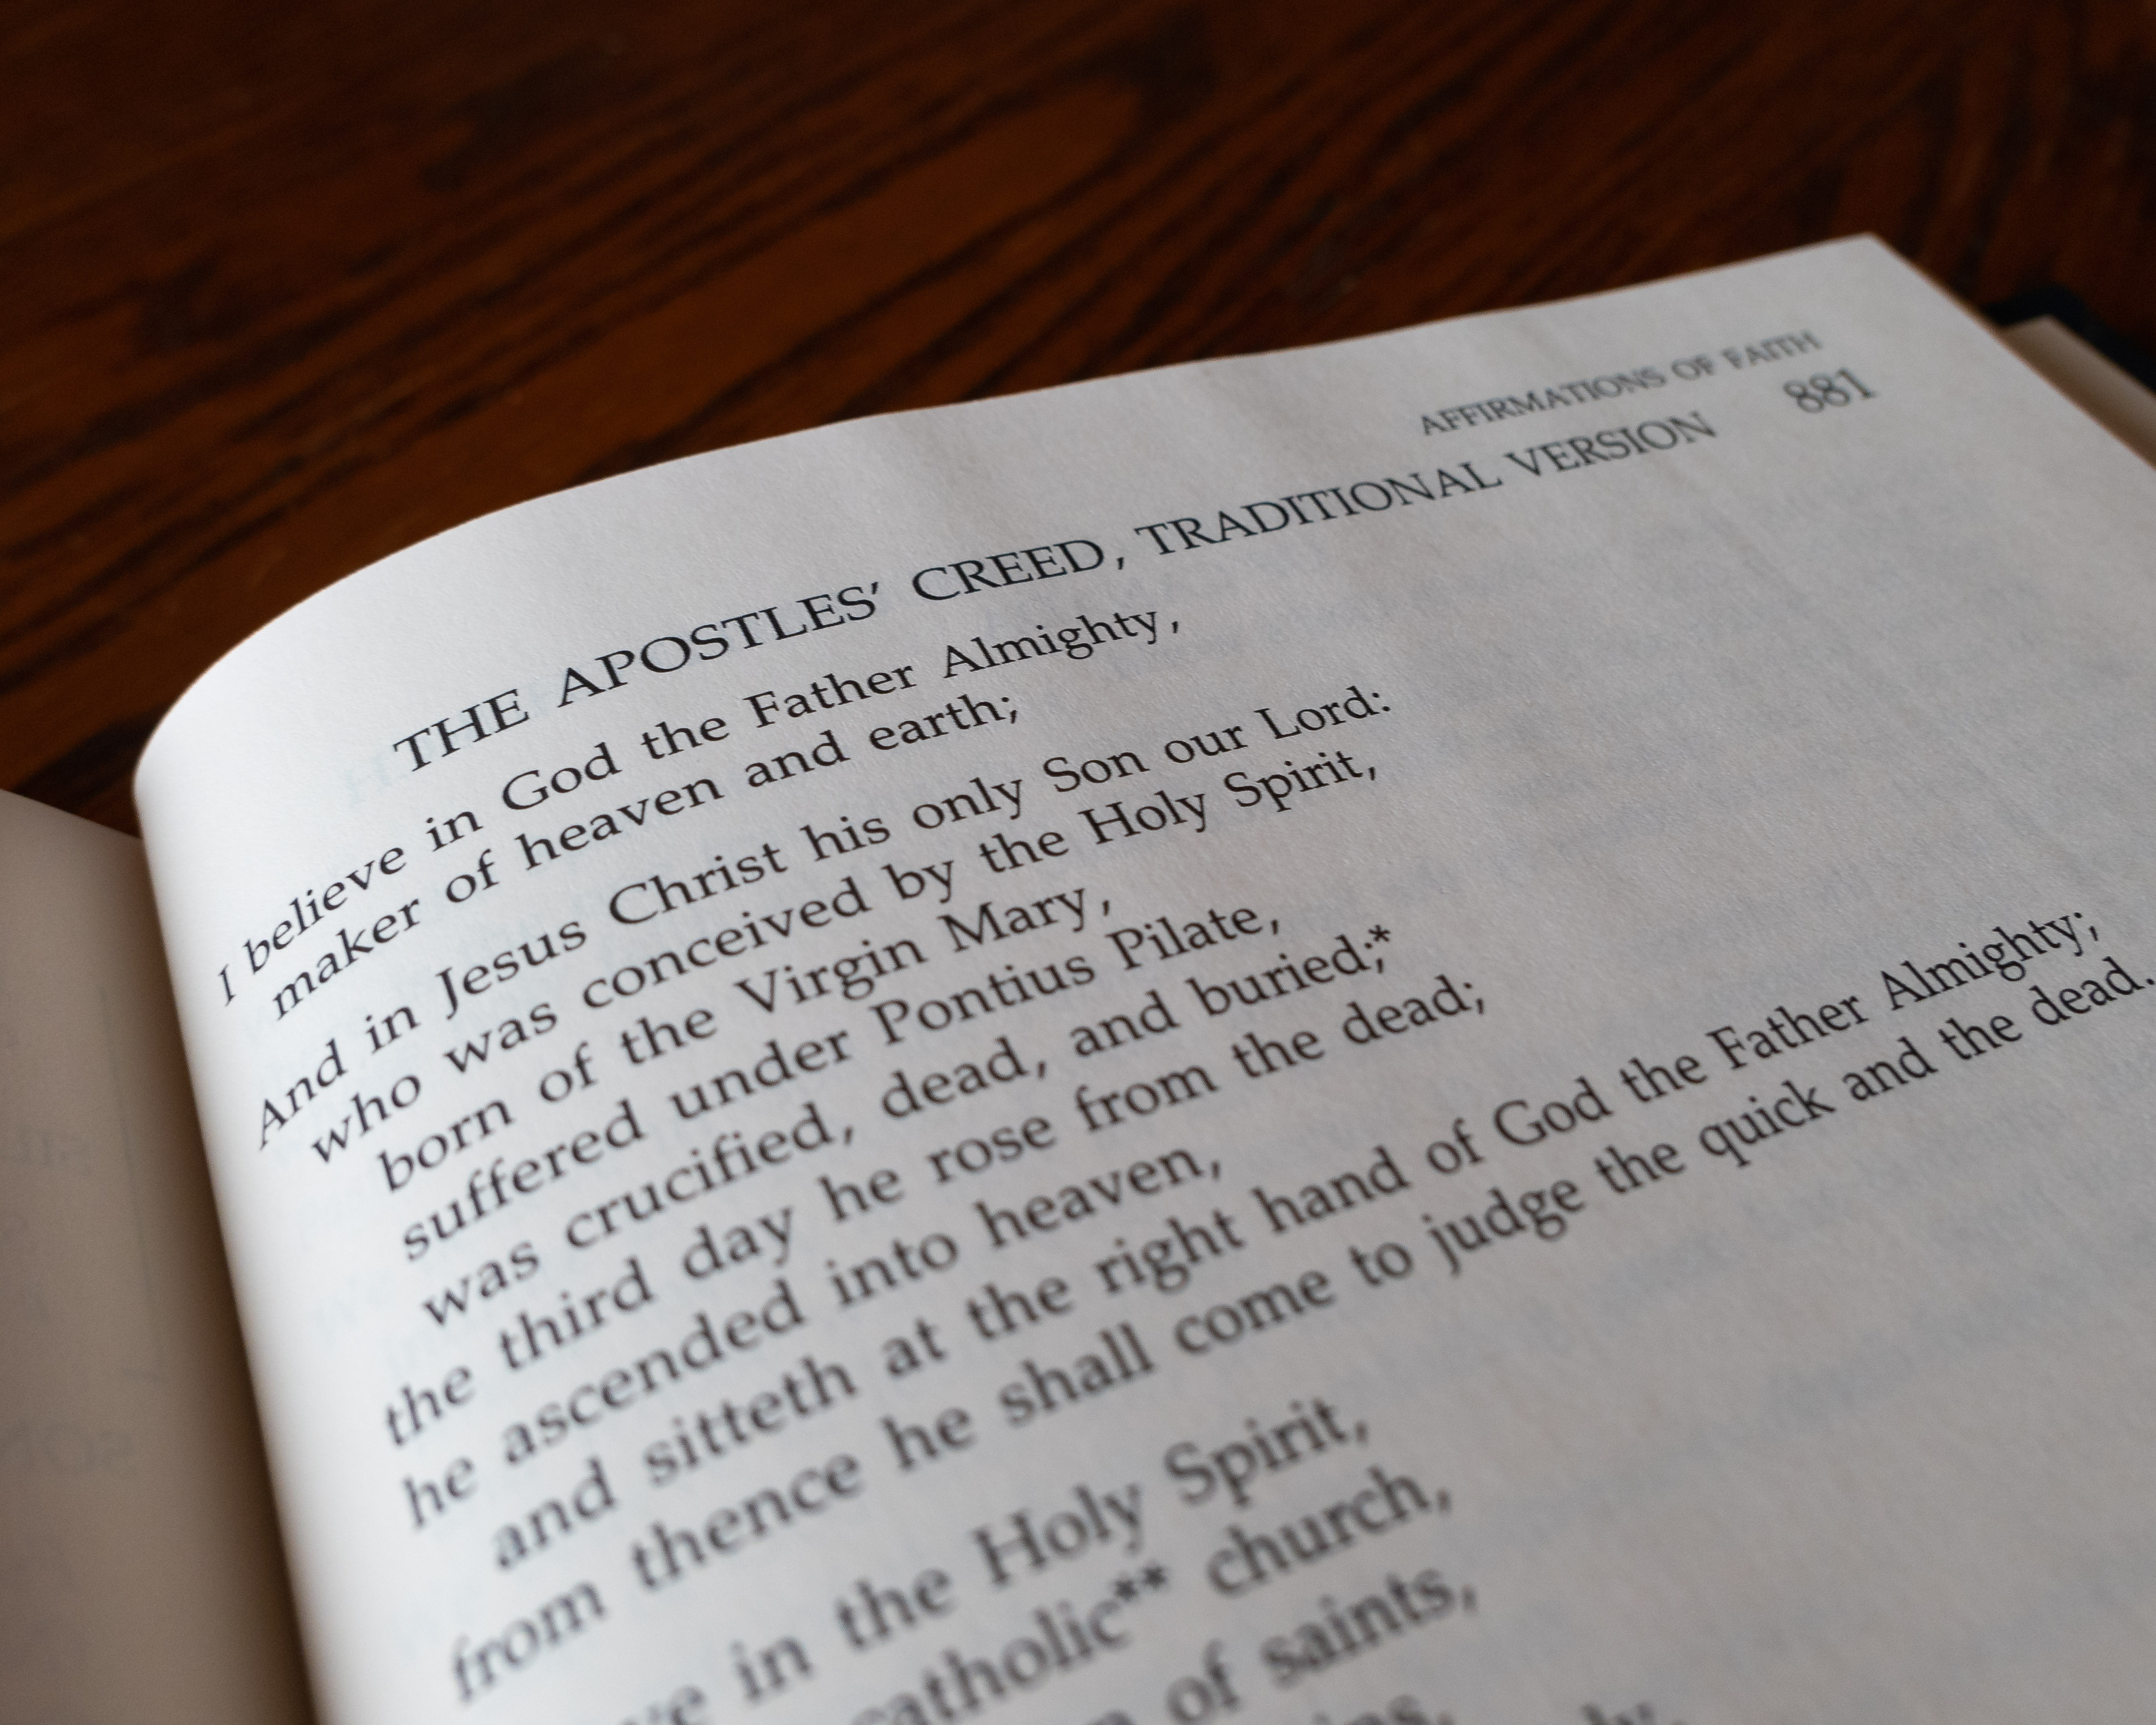 The Apostle’s Creed: The Holy Catholic Church